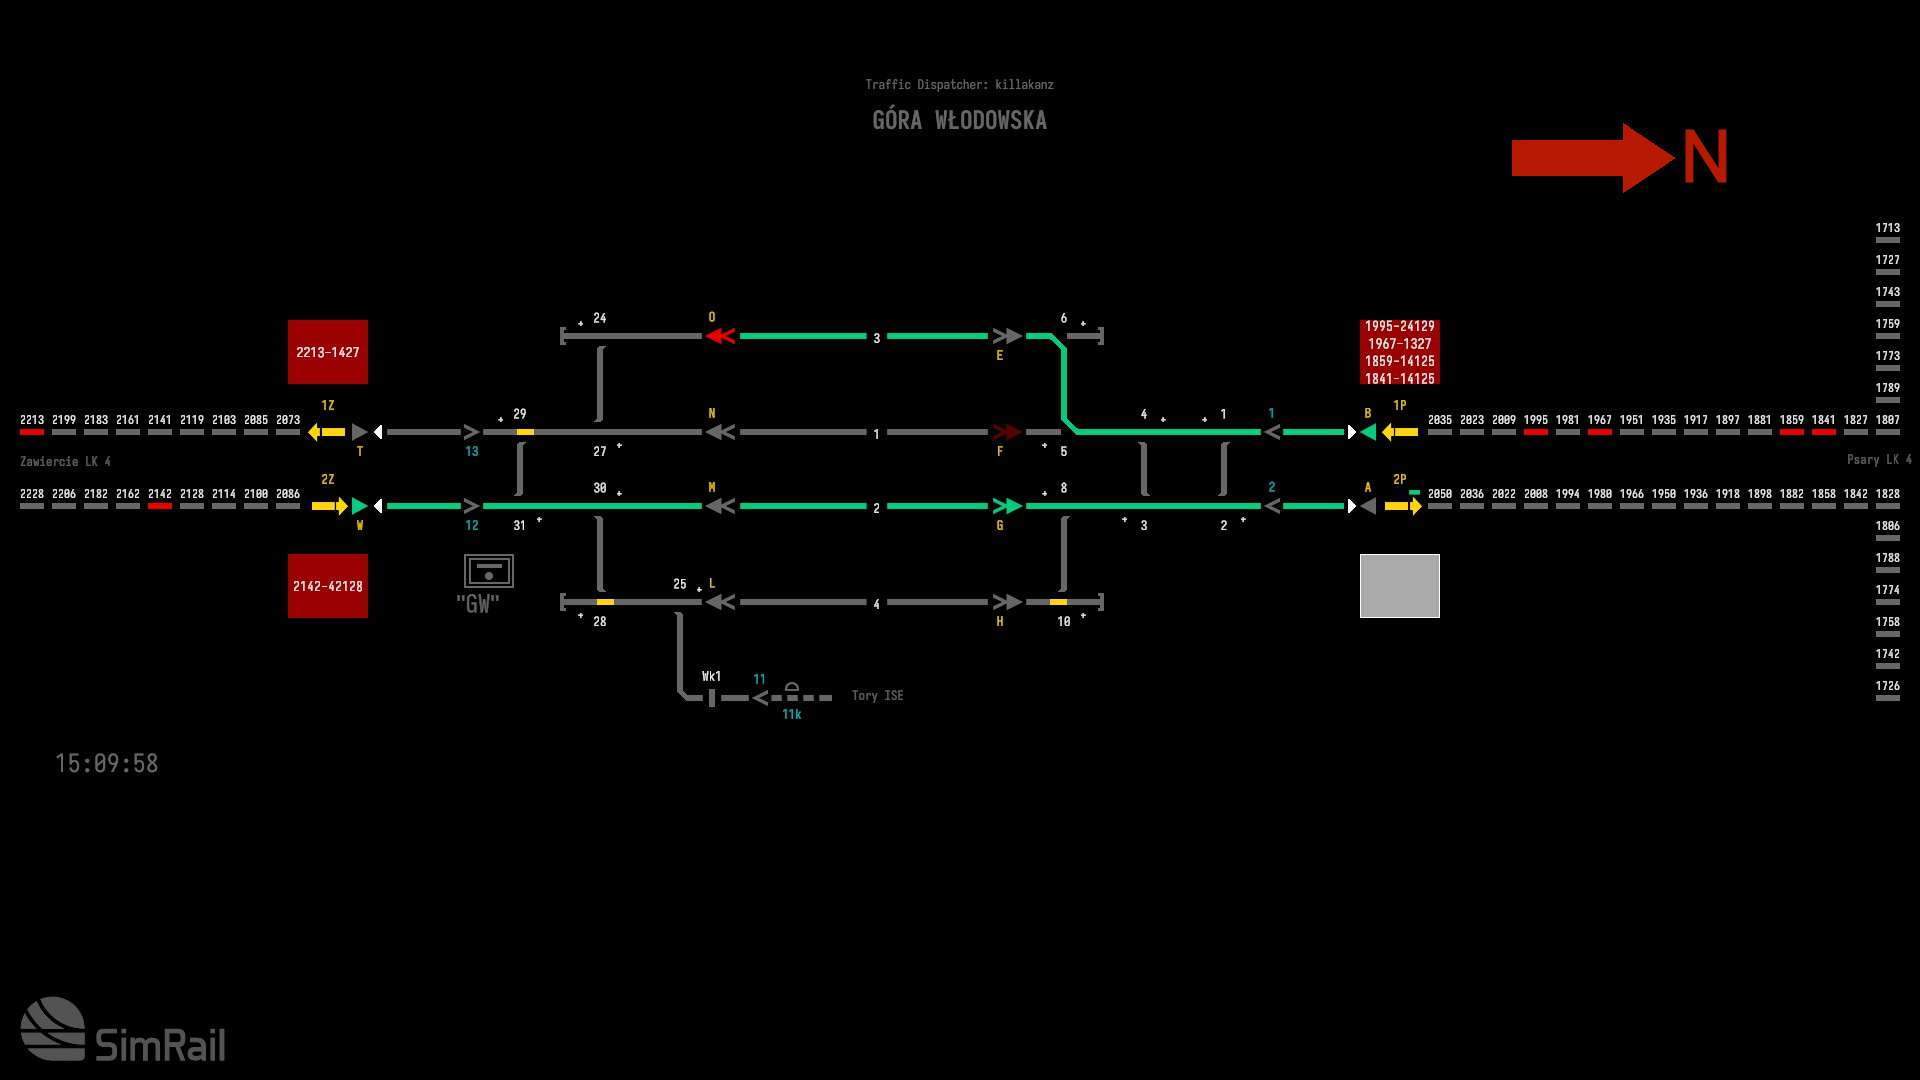 SimRail - The Railway Simulator - Basic Dispatching Full Guide - Gora Wlodowska - In Detail (computerised) - 308D589